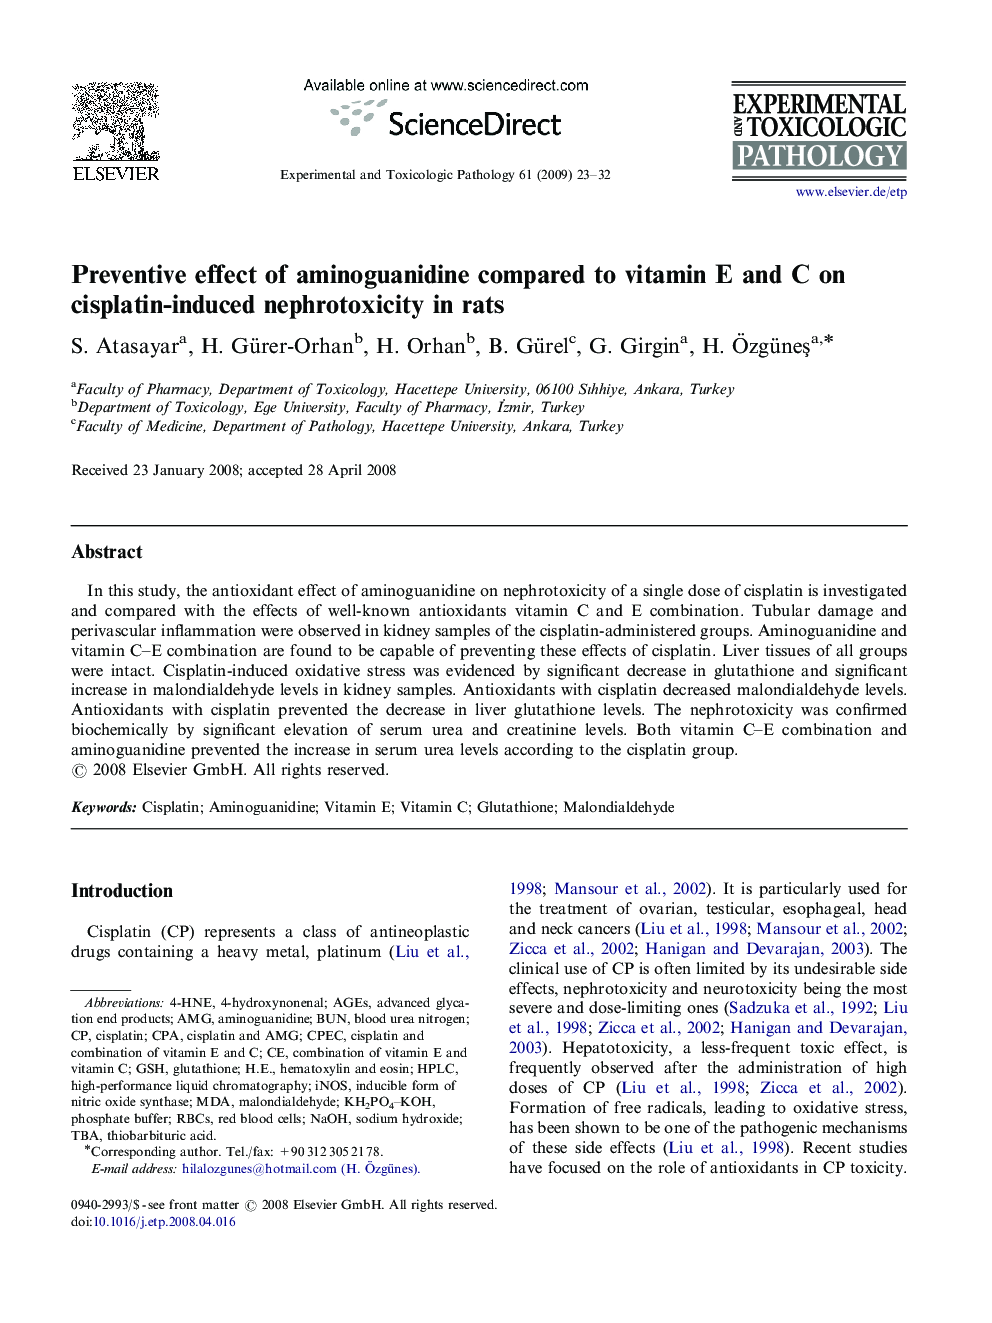 Preventive effect of aminoguanidine compared to vitamin E and C on cisplatin-induced nephrotoxicity in rats